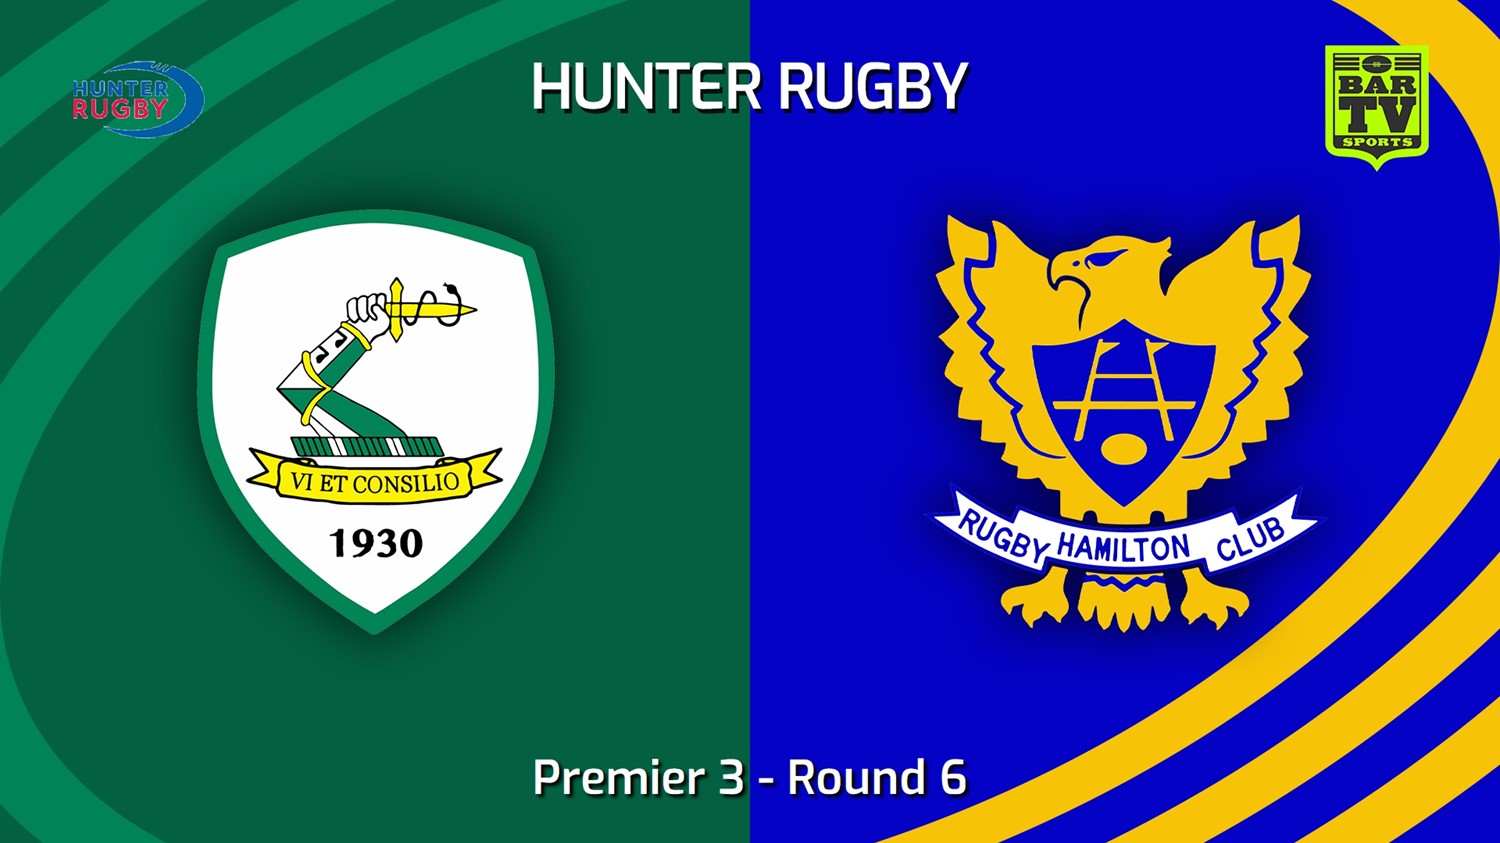 240518-video-Hunter Rugby Round 6 - Premier 3 - Merewether Carlton v Hamilton Hawks Slate Image